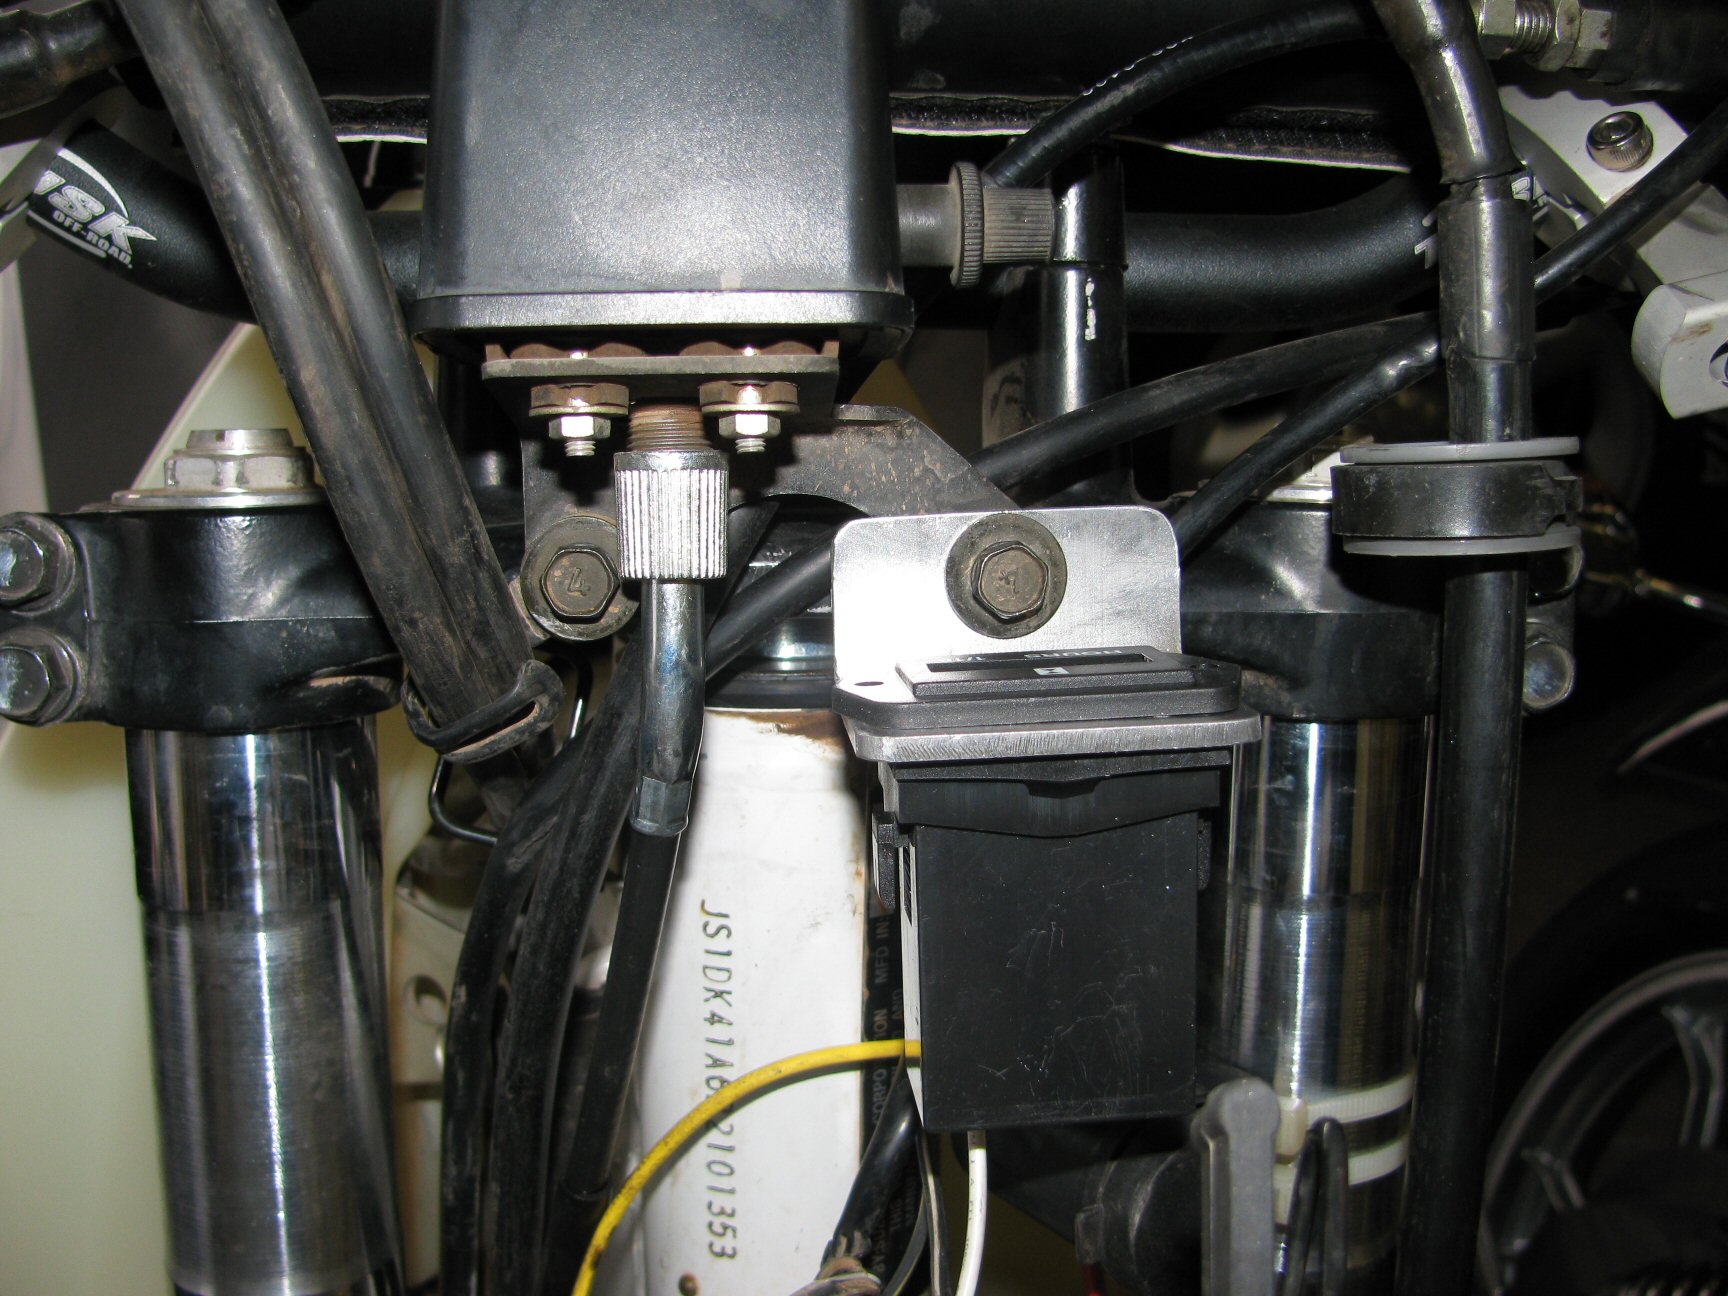 Pro Power Hour Meter installed on a 1993 Suzuki DR350 dirt motorcycle.